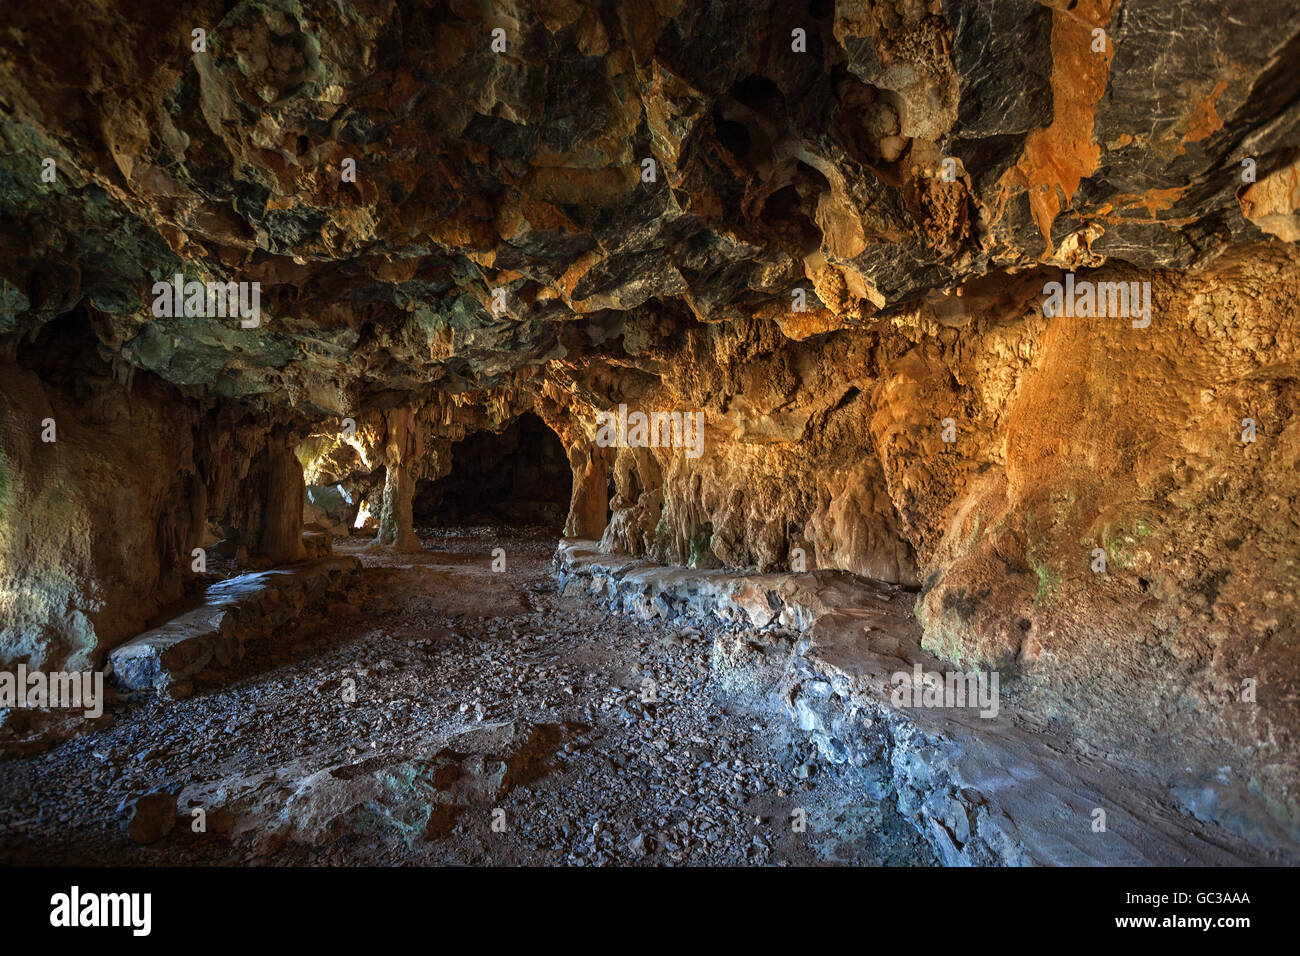 Dans une grotte appelée cône karstiques, à proximité de mogote Viñales, Vallée de Viñales, province de Pinar del Río, Cuba Banque D'Images